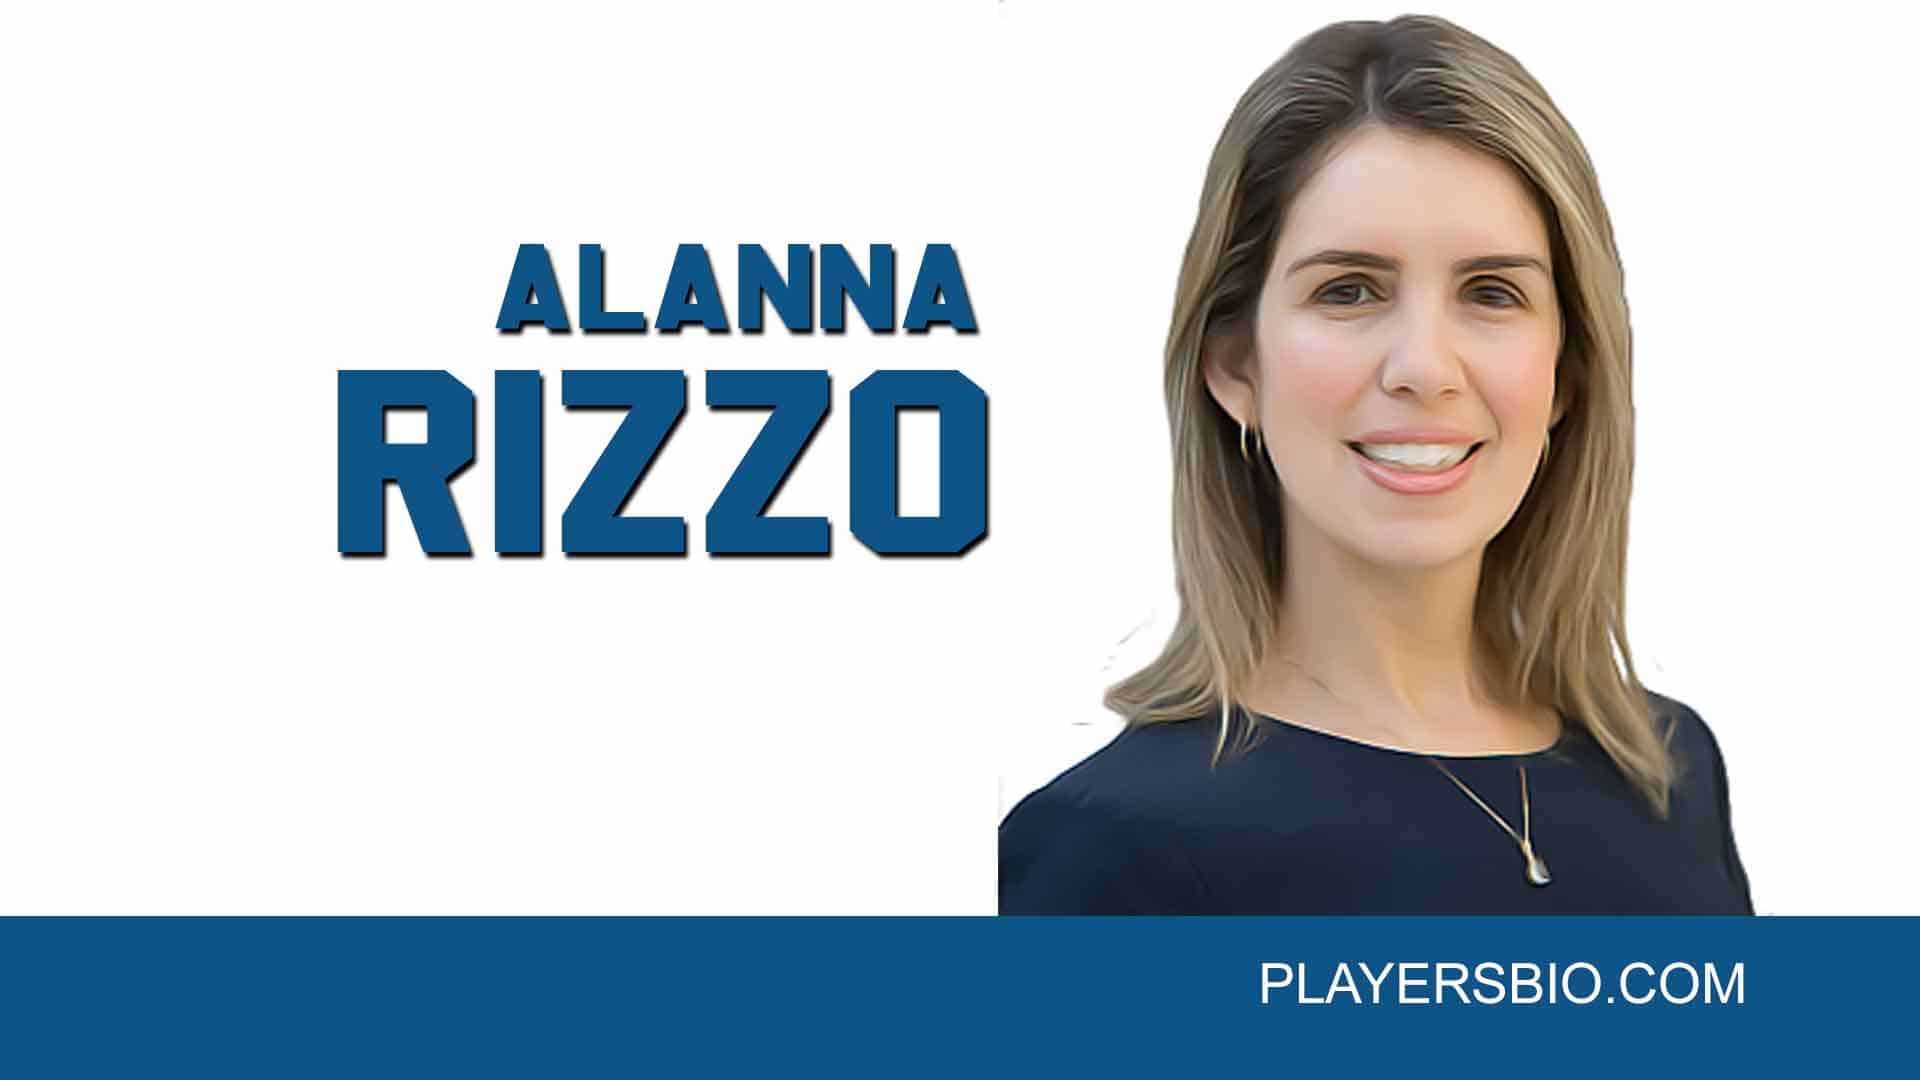 Alanna Rizzo 2022 Update: Married, Engaged & Net Worth - Players Bio.